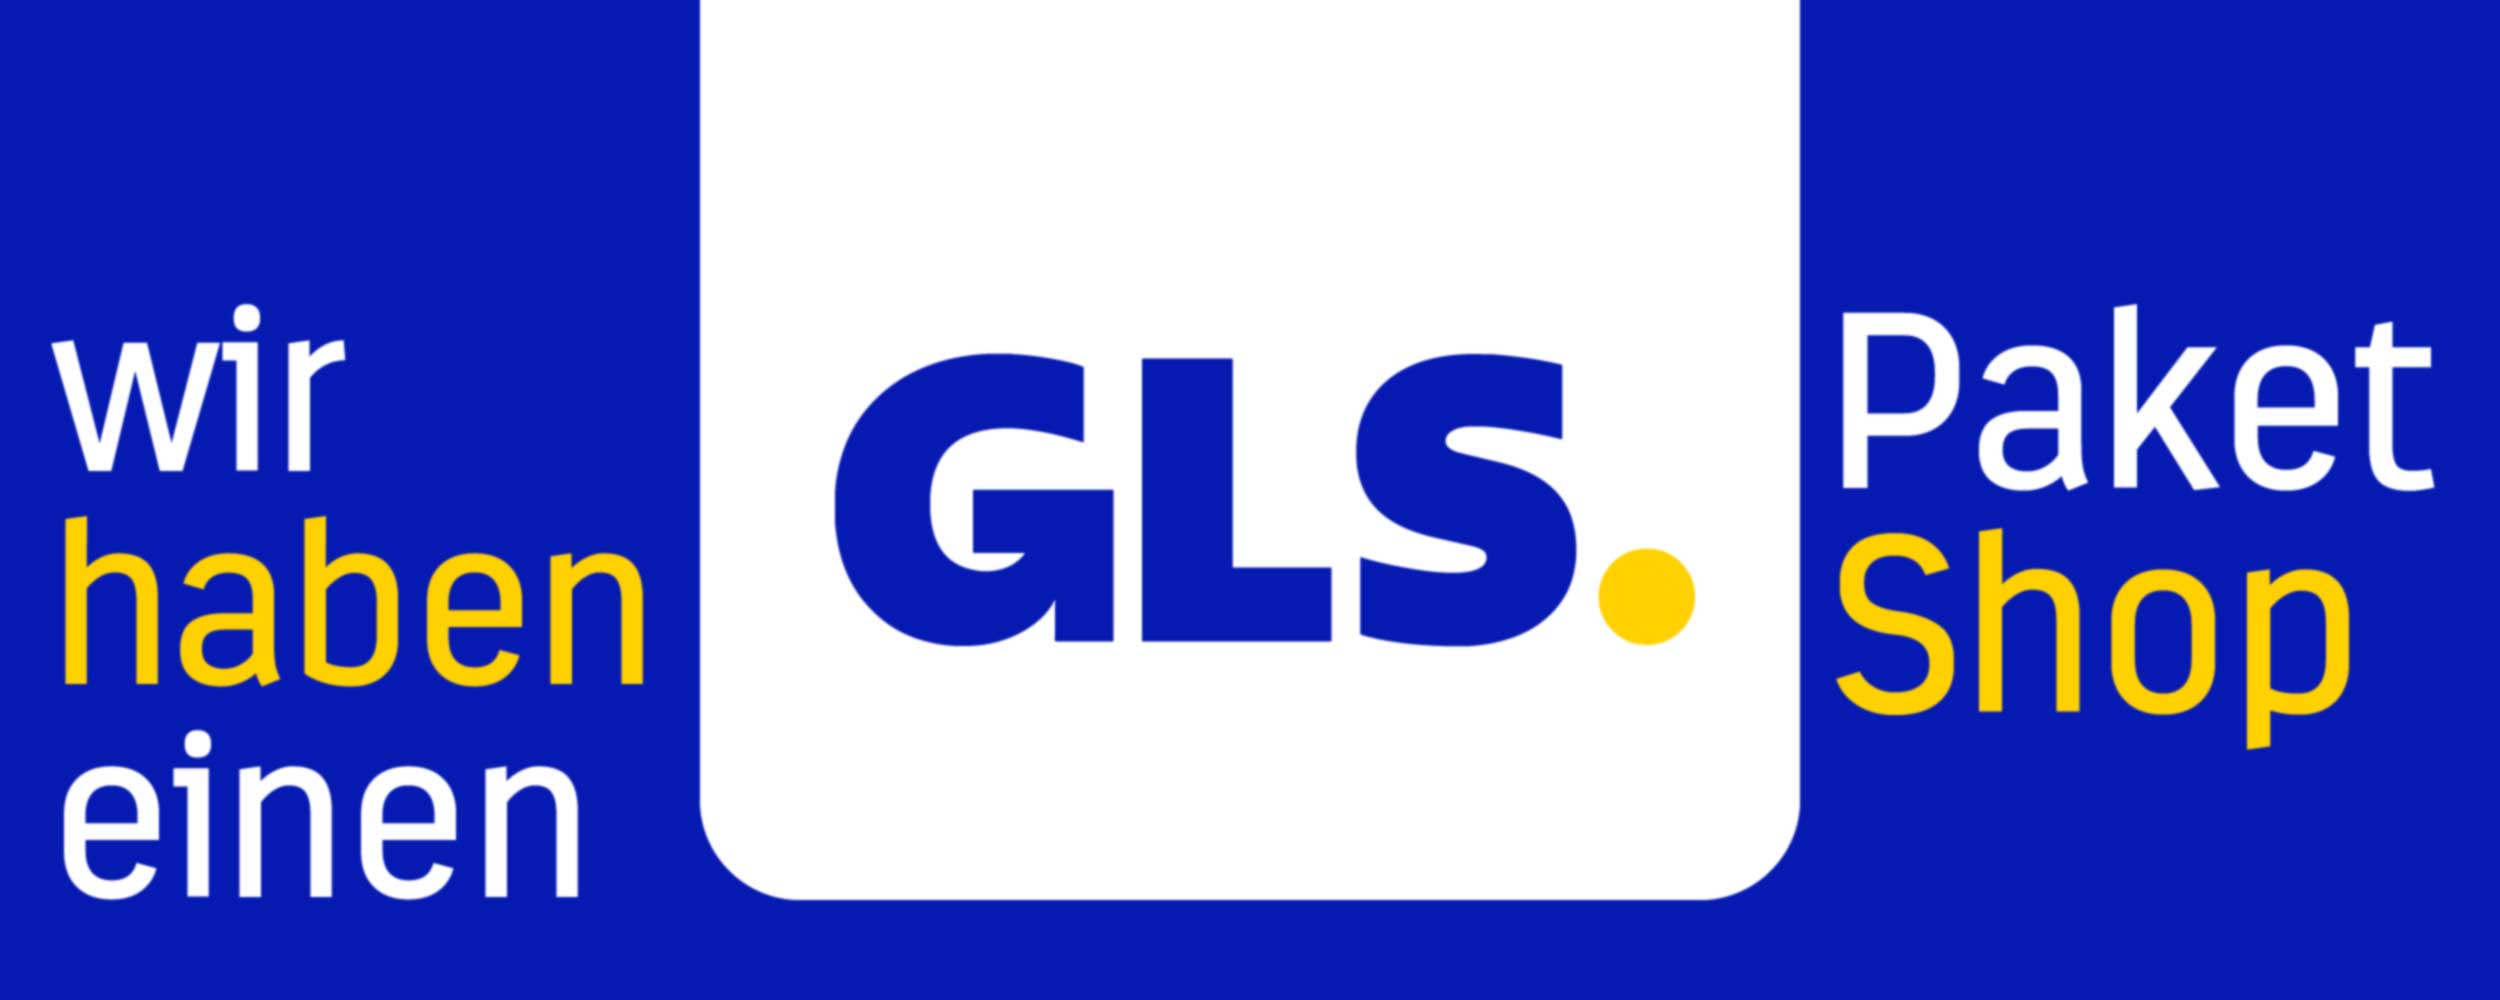 GLS Shop